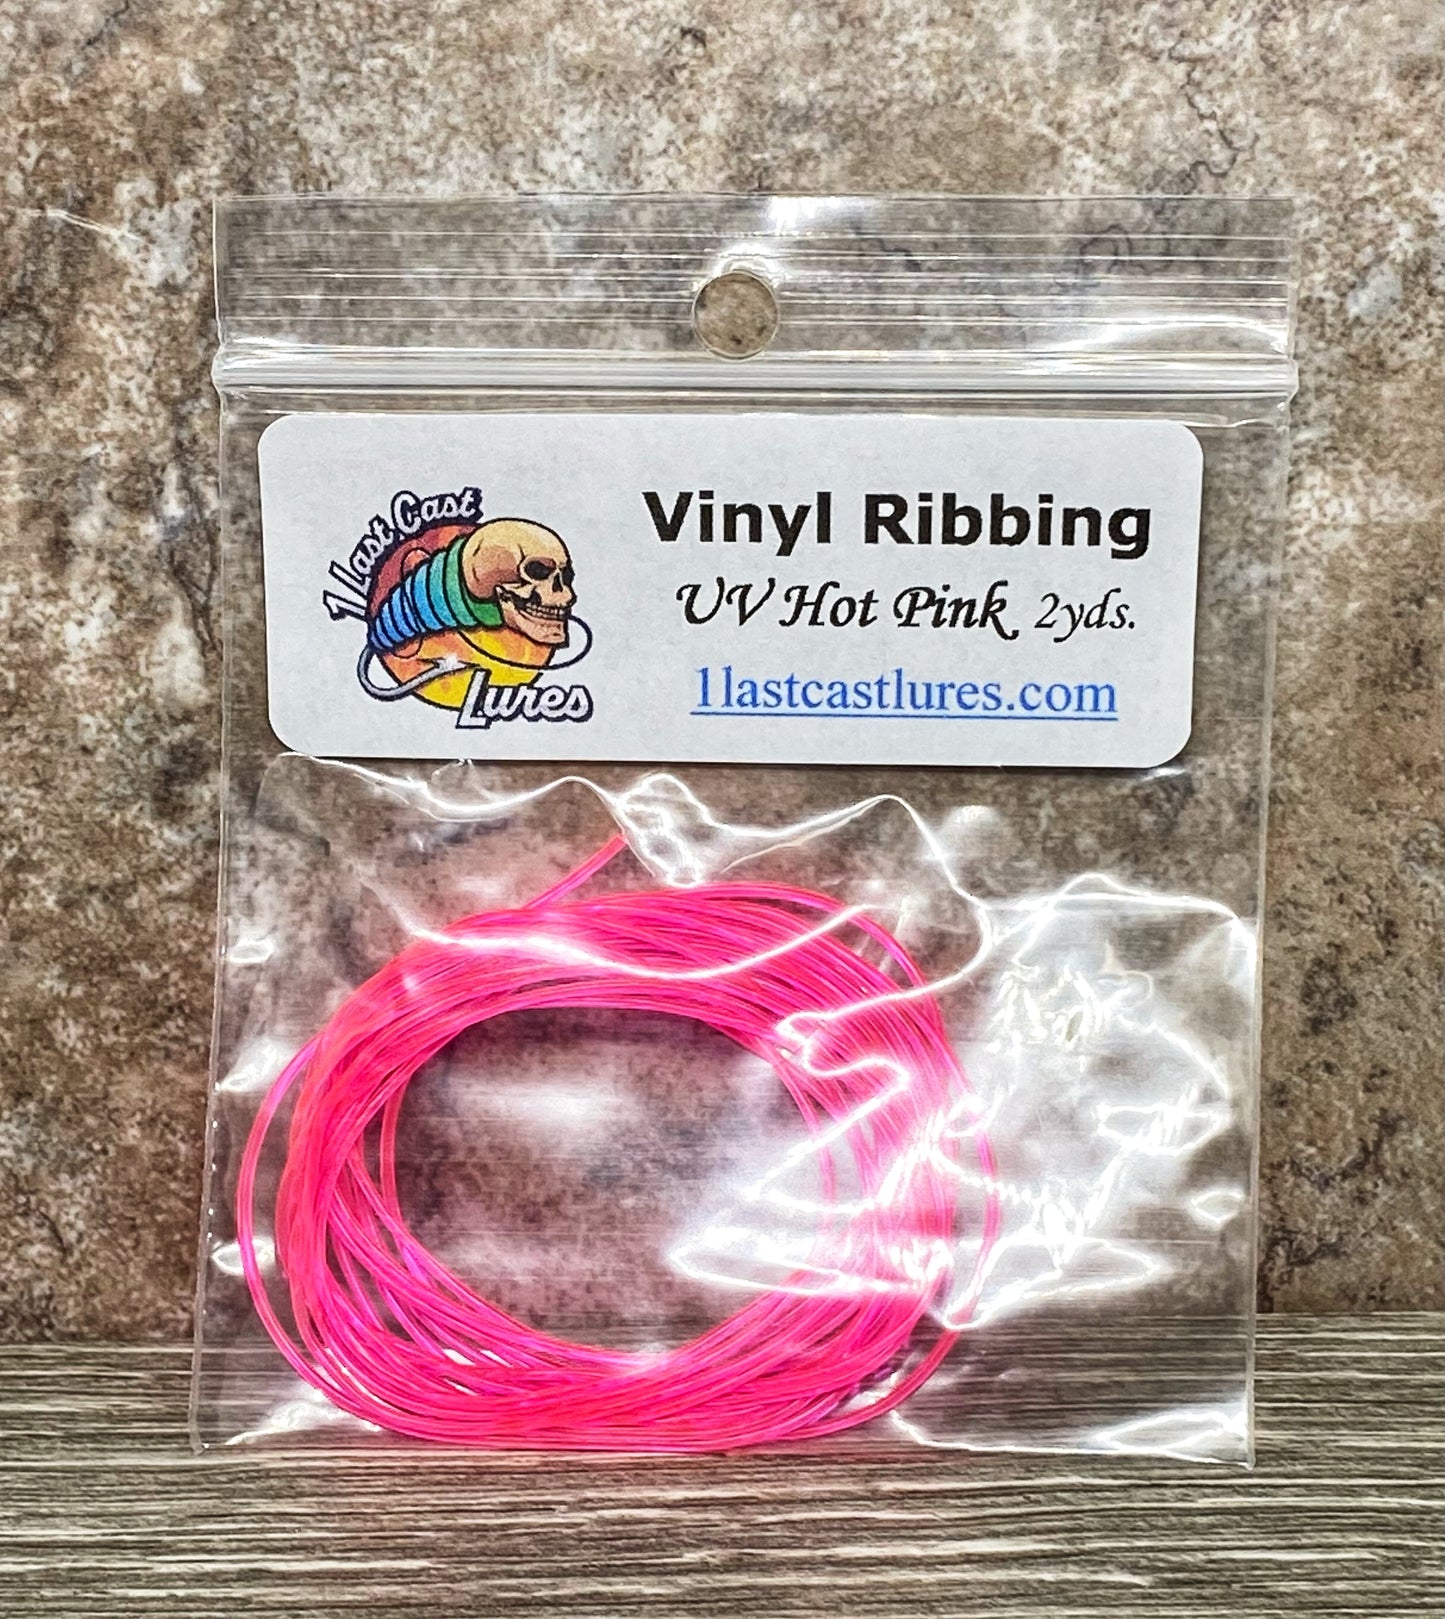 UV Hot Pink Vinyl Ribbing